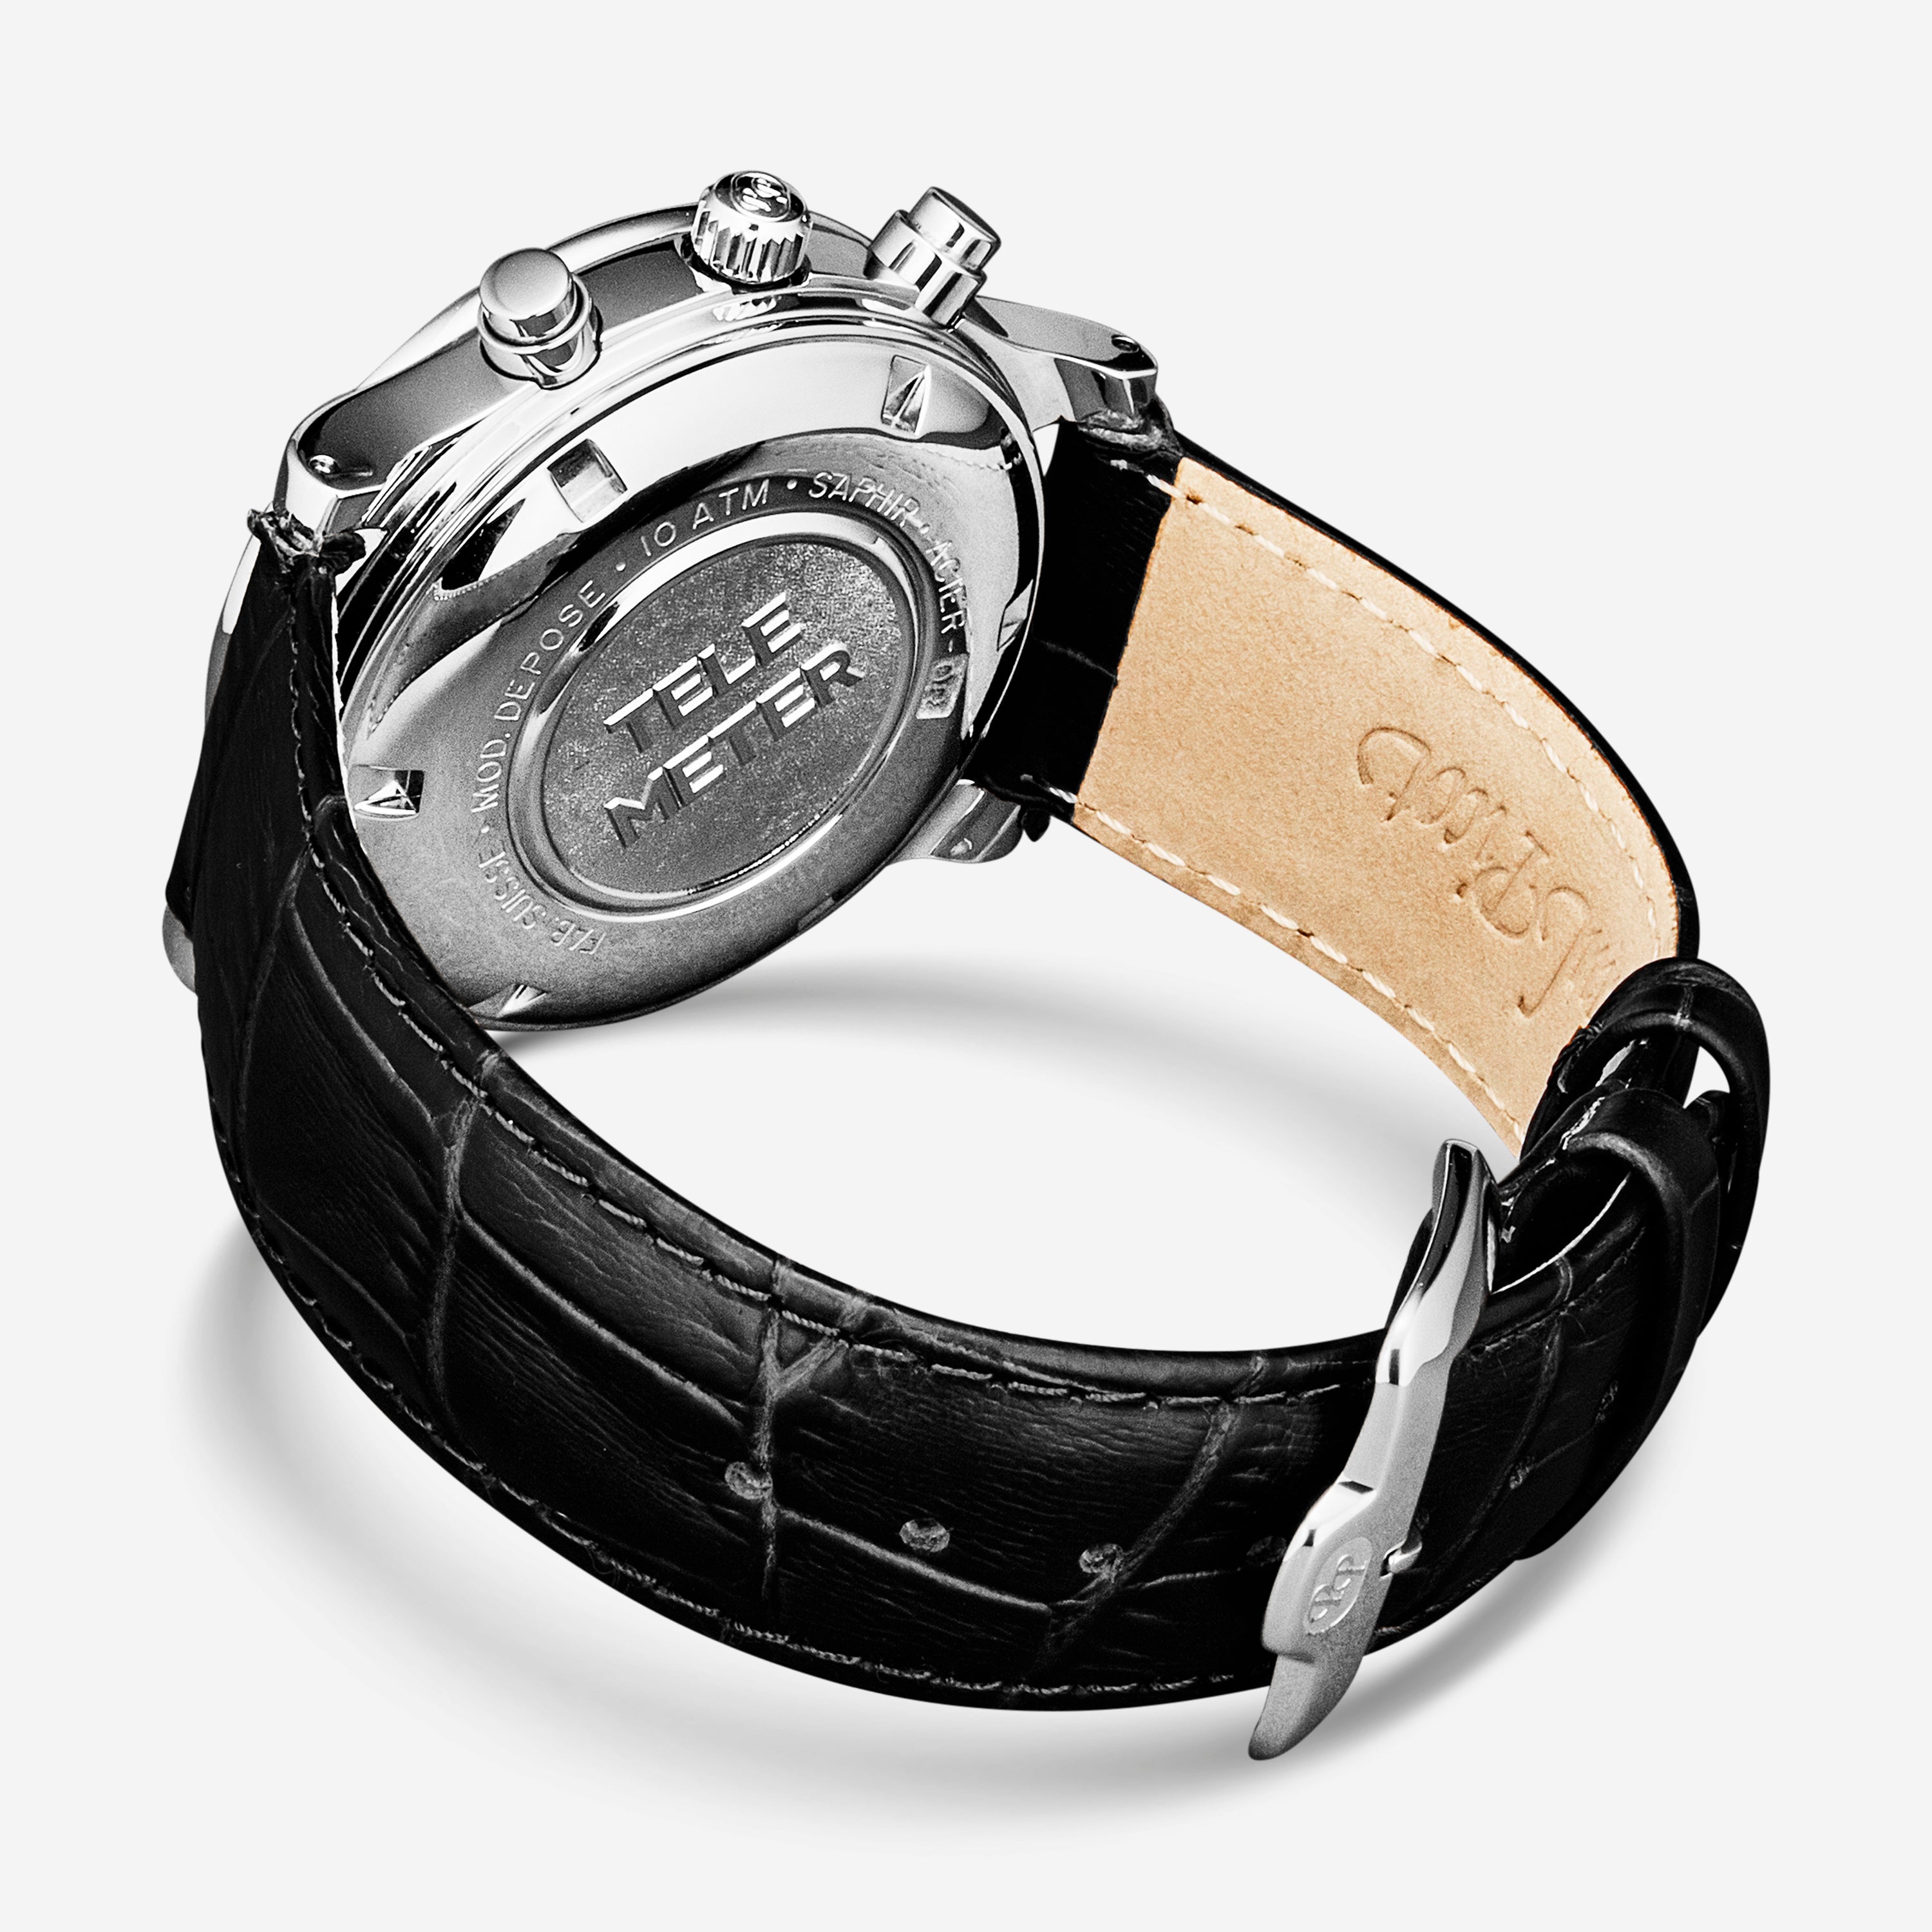 Paul Picot Telemeter Chronograph Black Dial Black Leather Strap Men's Automatic Watch P7004A20.332